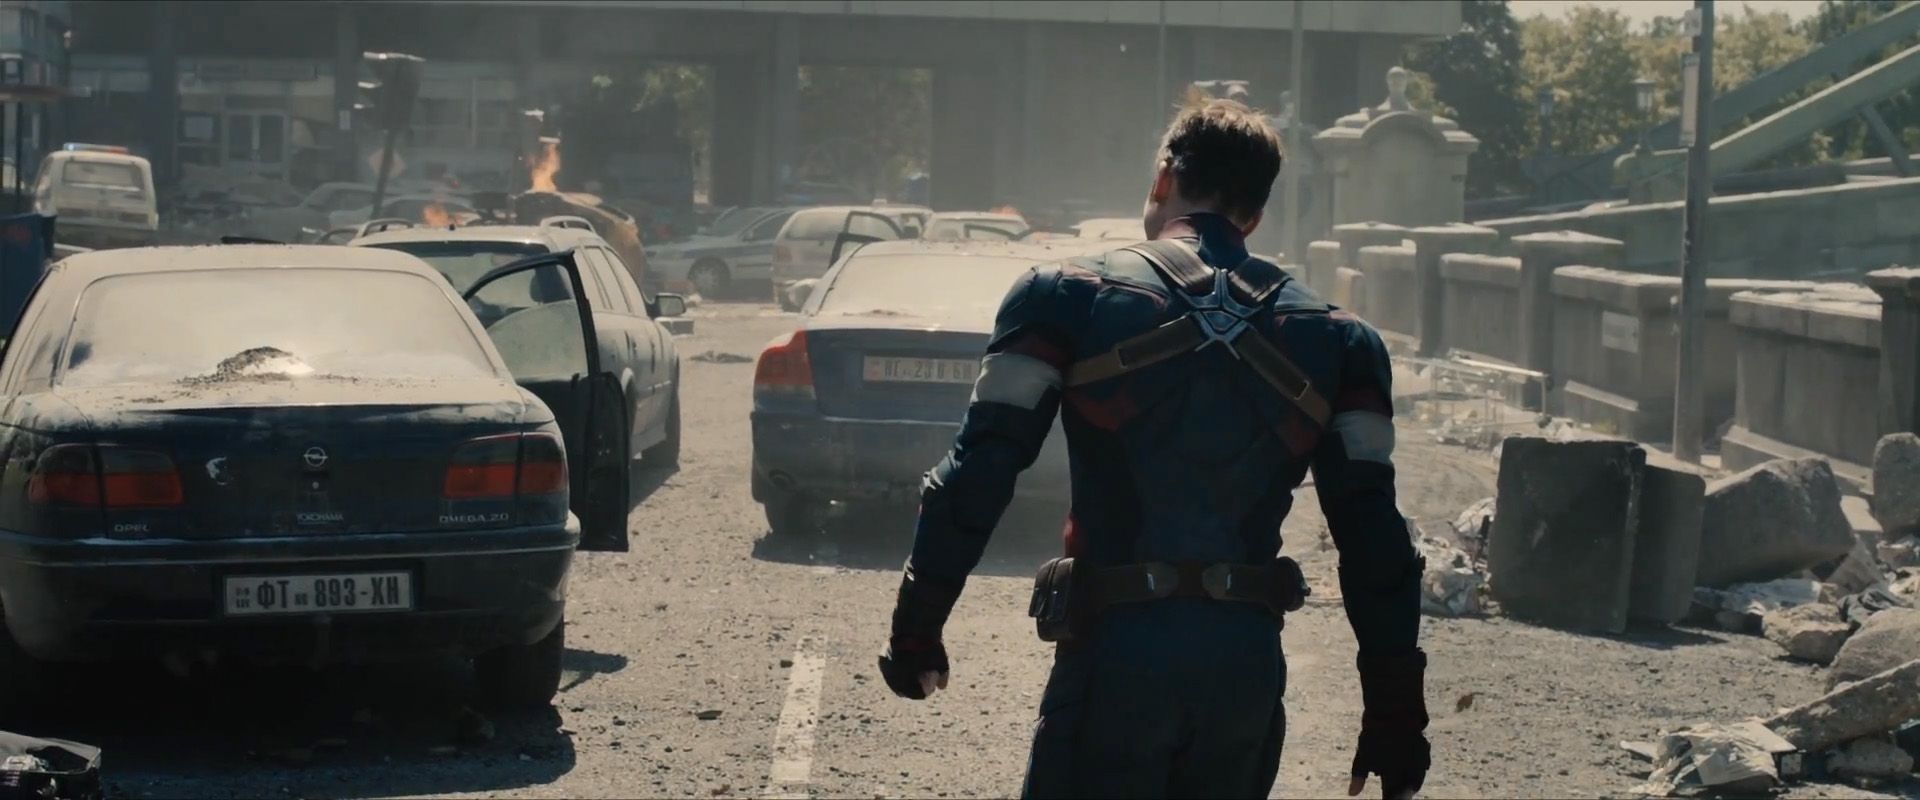 Avengers: Age of Ultron Trailer 1 - Captain America Eastern Europe